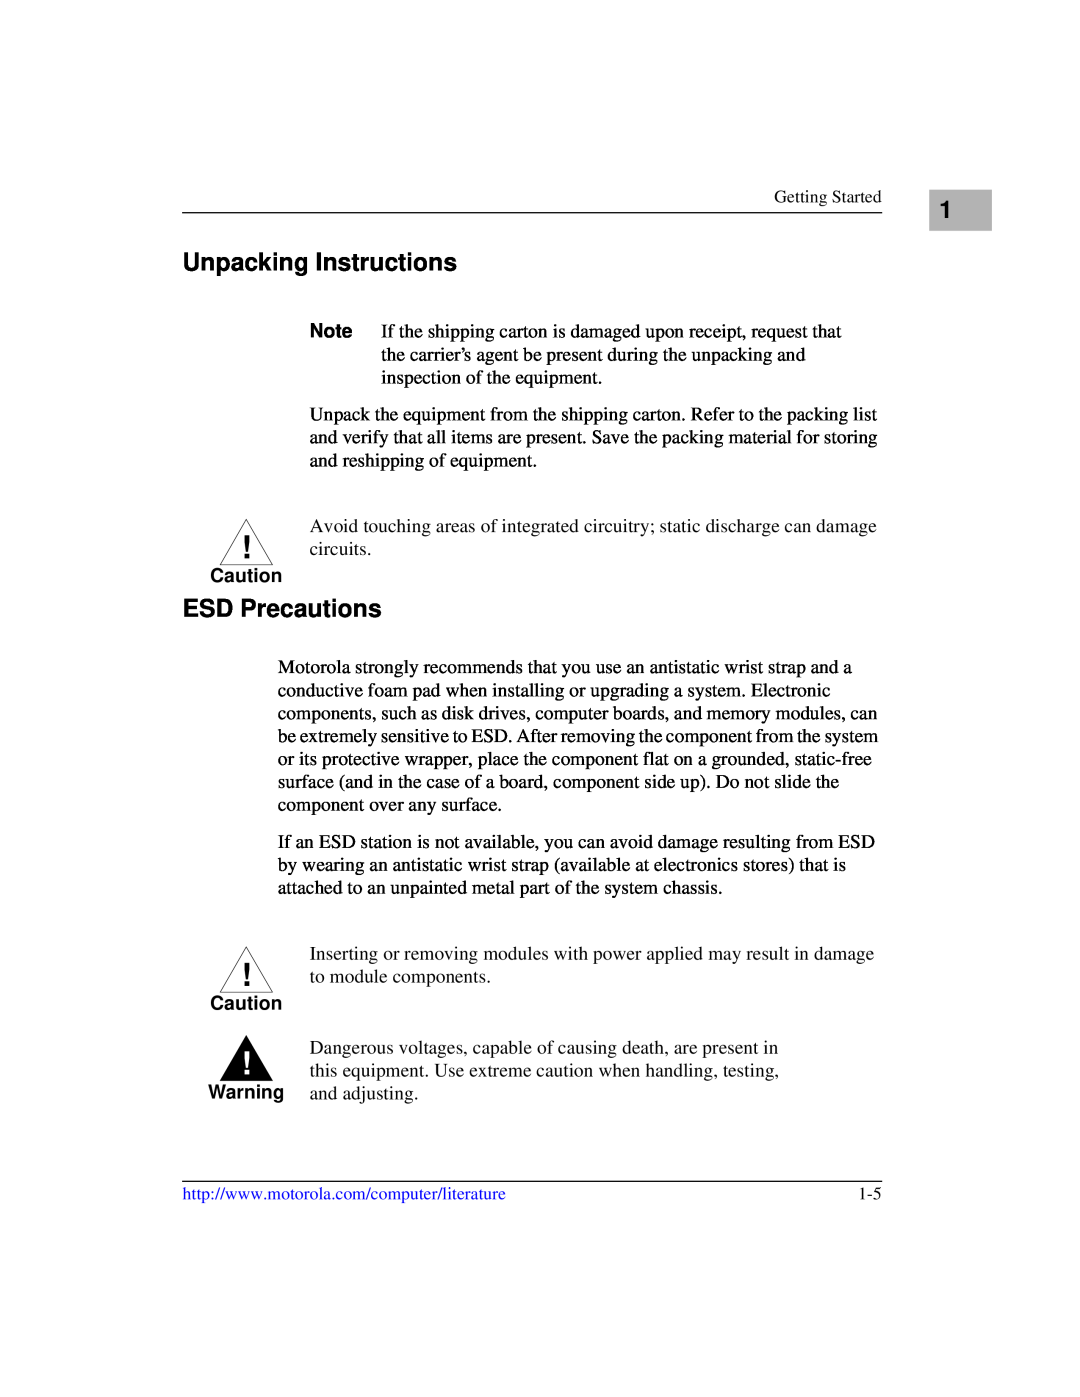 Motorola IH5, MCPN750A manual Unpacking Instructions, ESD Precautions 